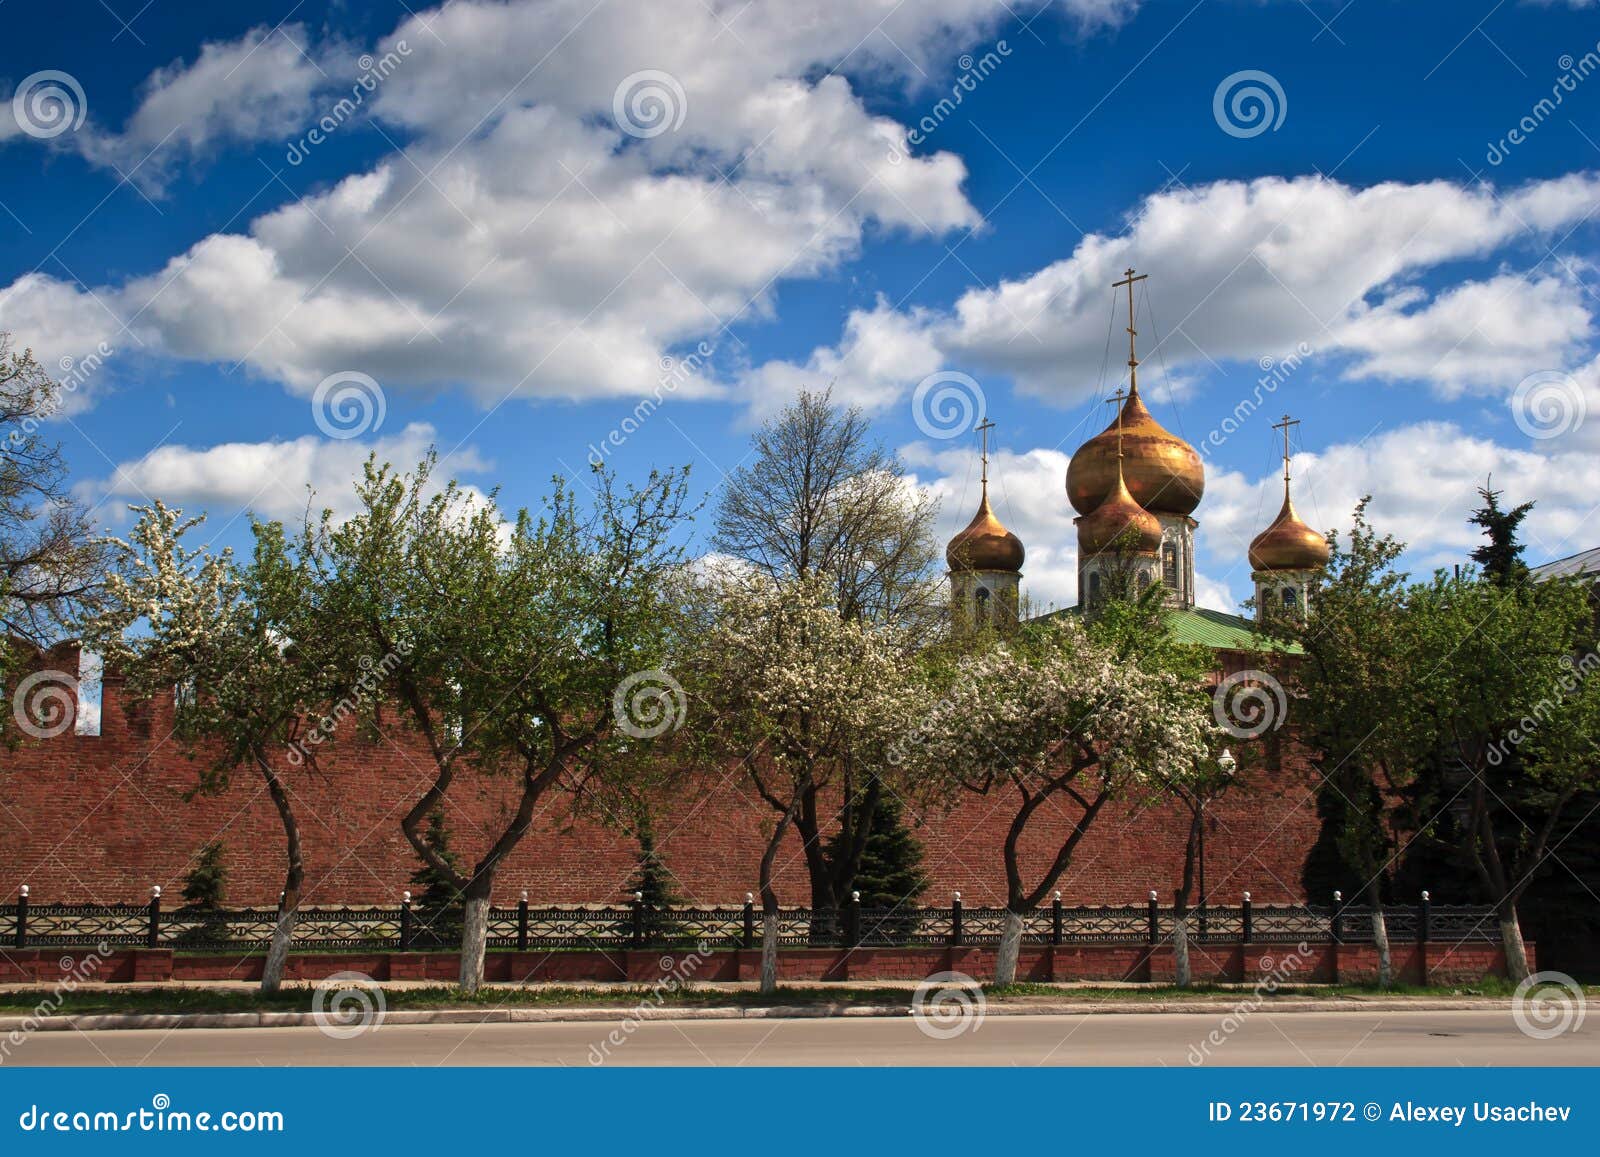 Russia Tula kremlin stock photo. Image of gate, city - 23671972